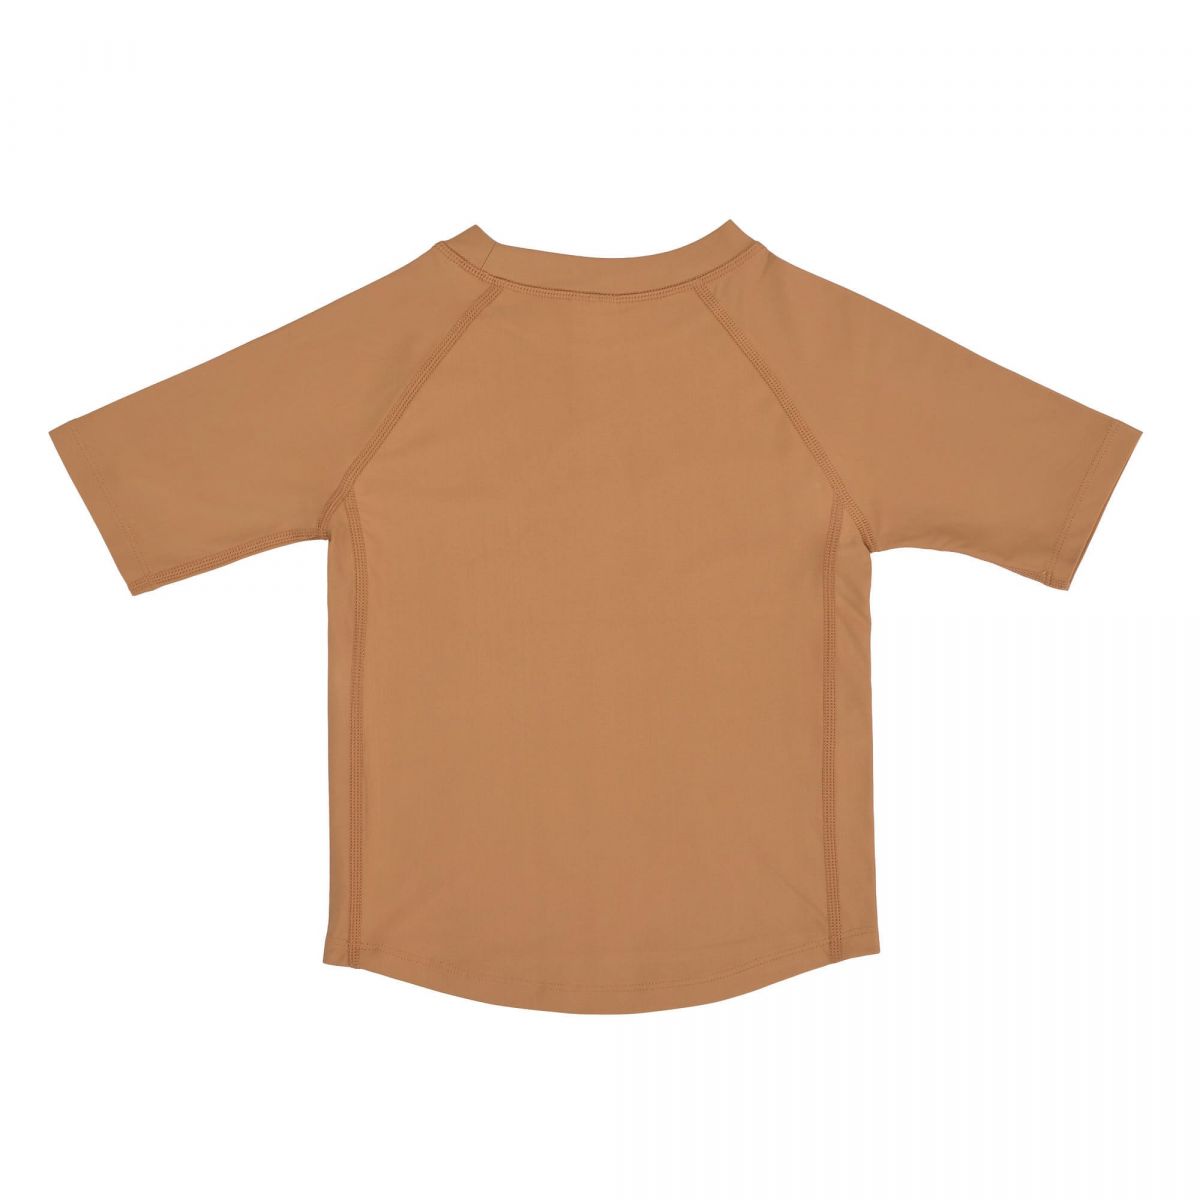 Lässig UV Shirt Kids Short Sleeve - Krabe - brown (Caramel ) - 74/80